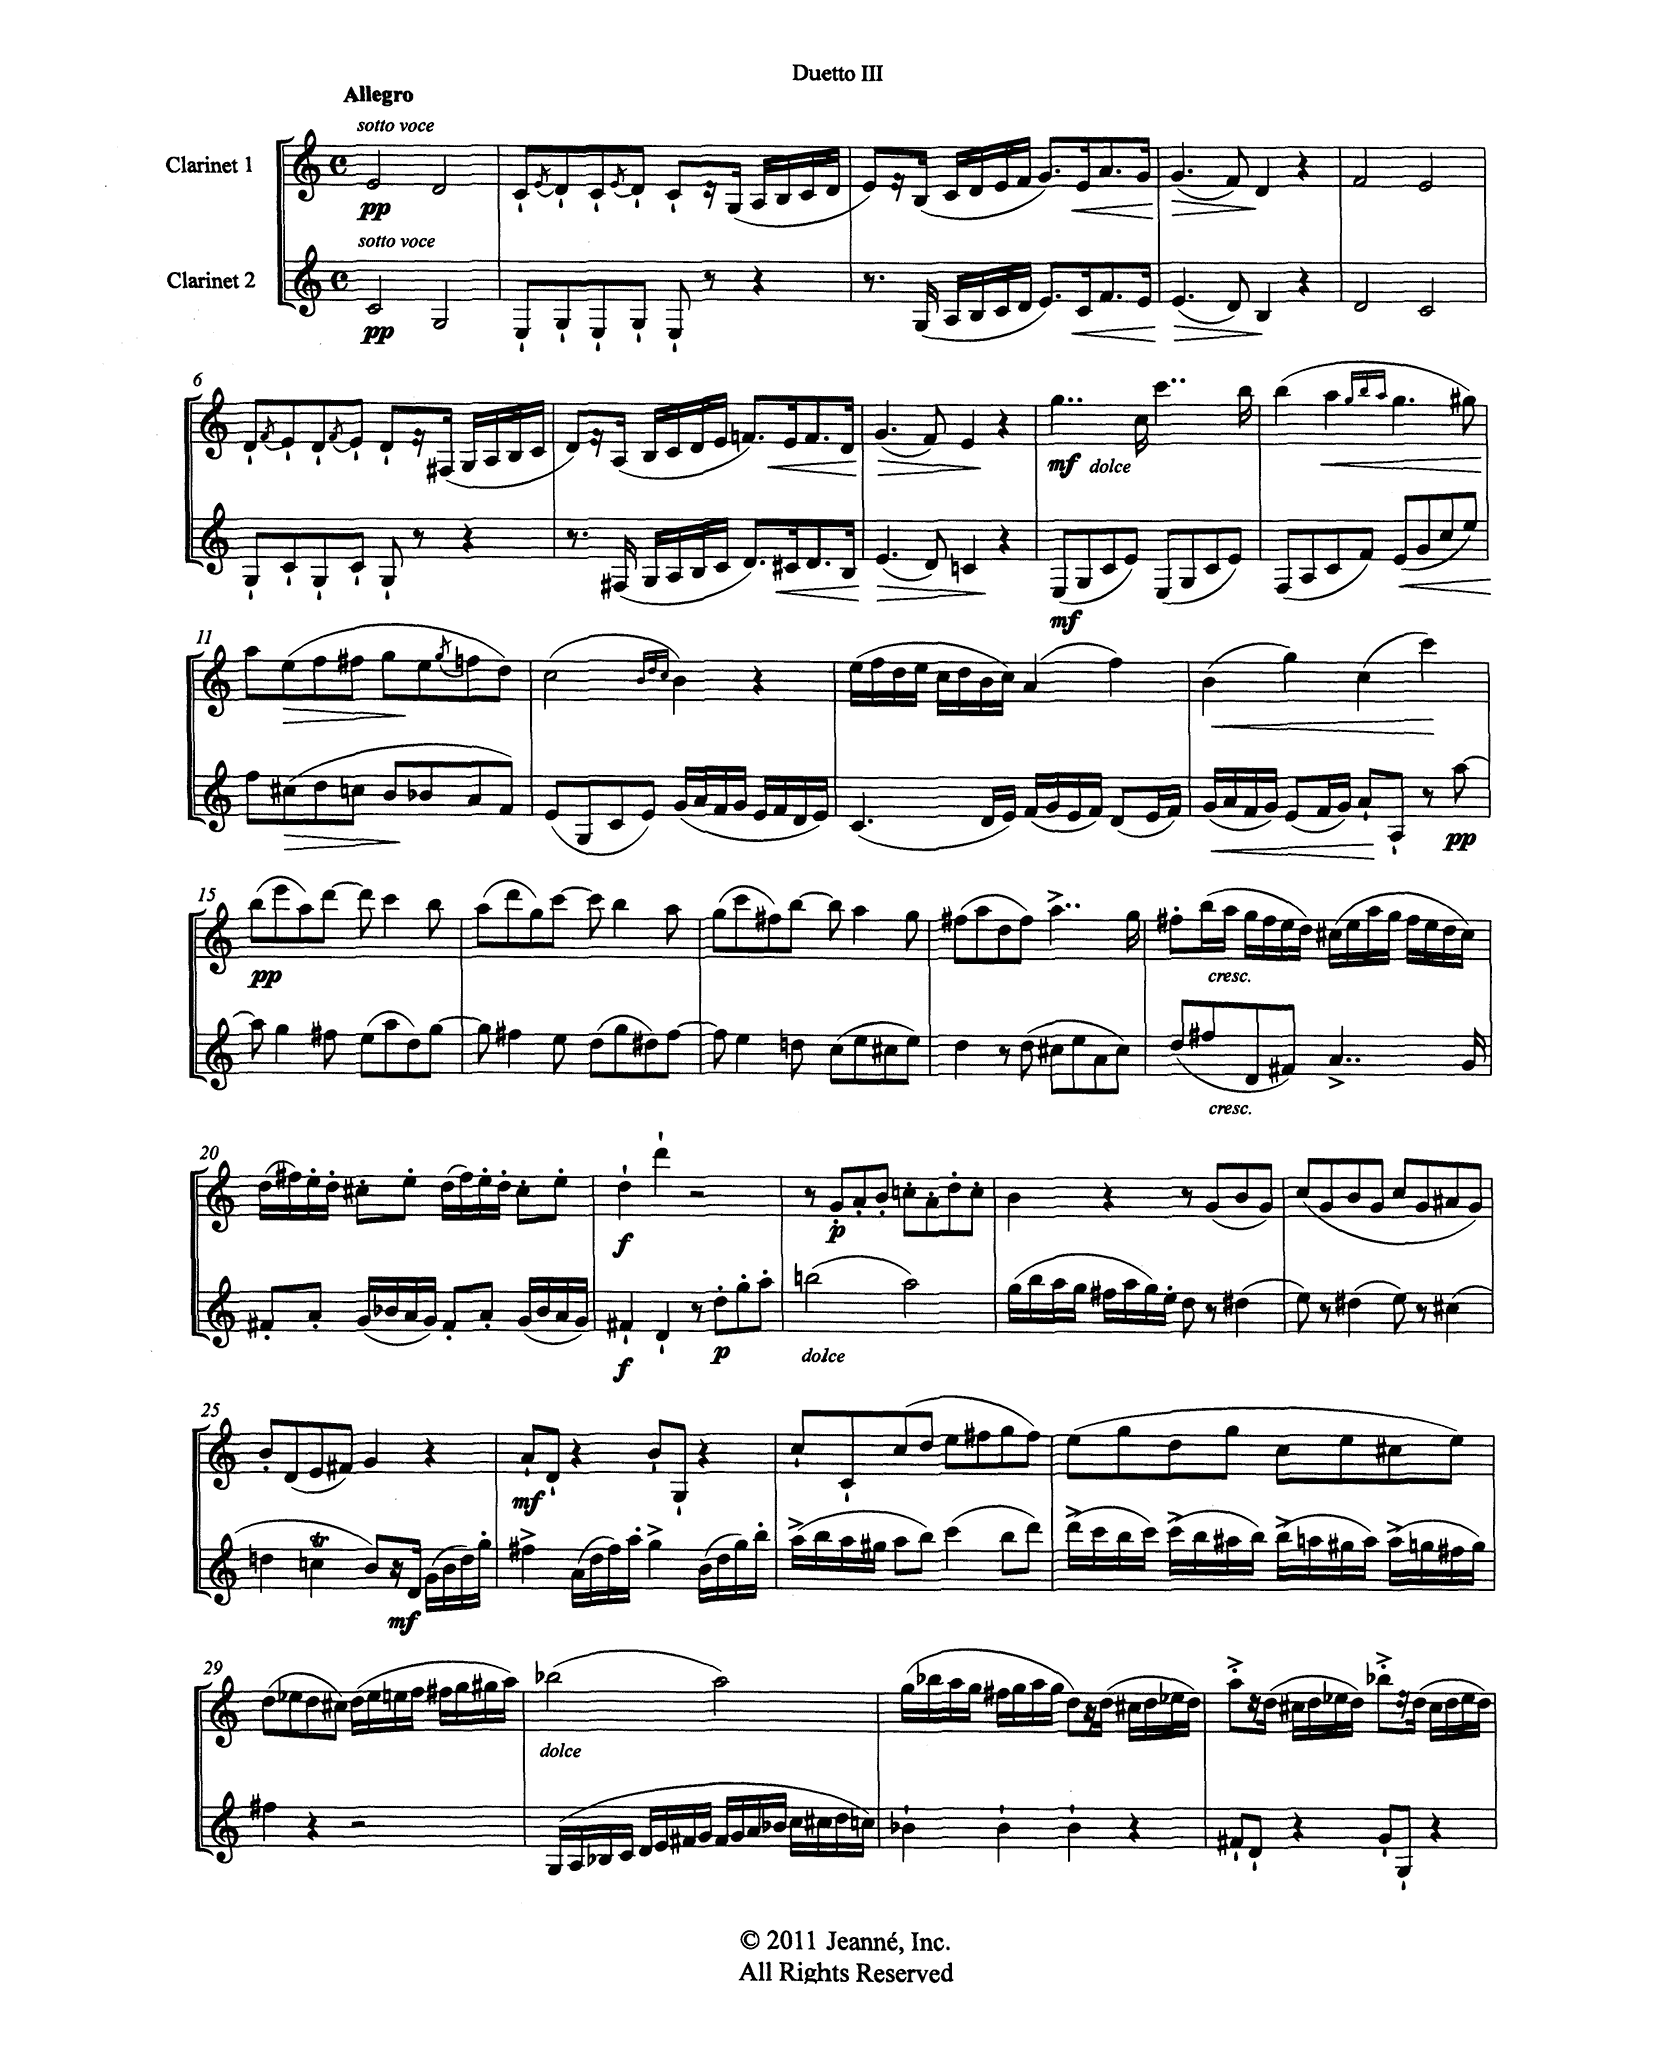 Crusell Clarinet Duet No. 3 in C Major score - movement 1